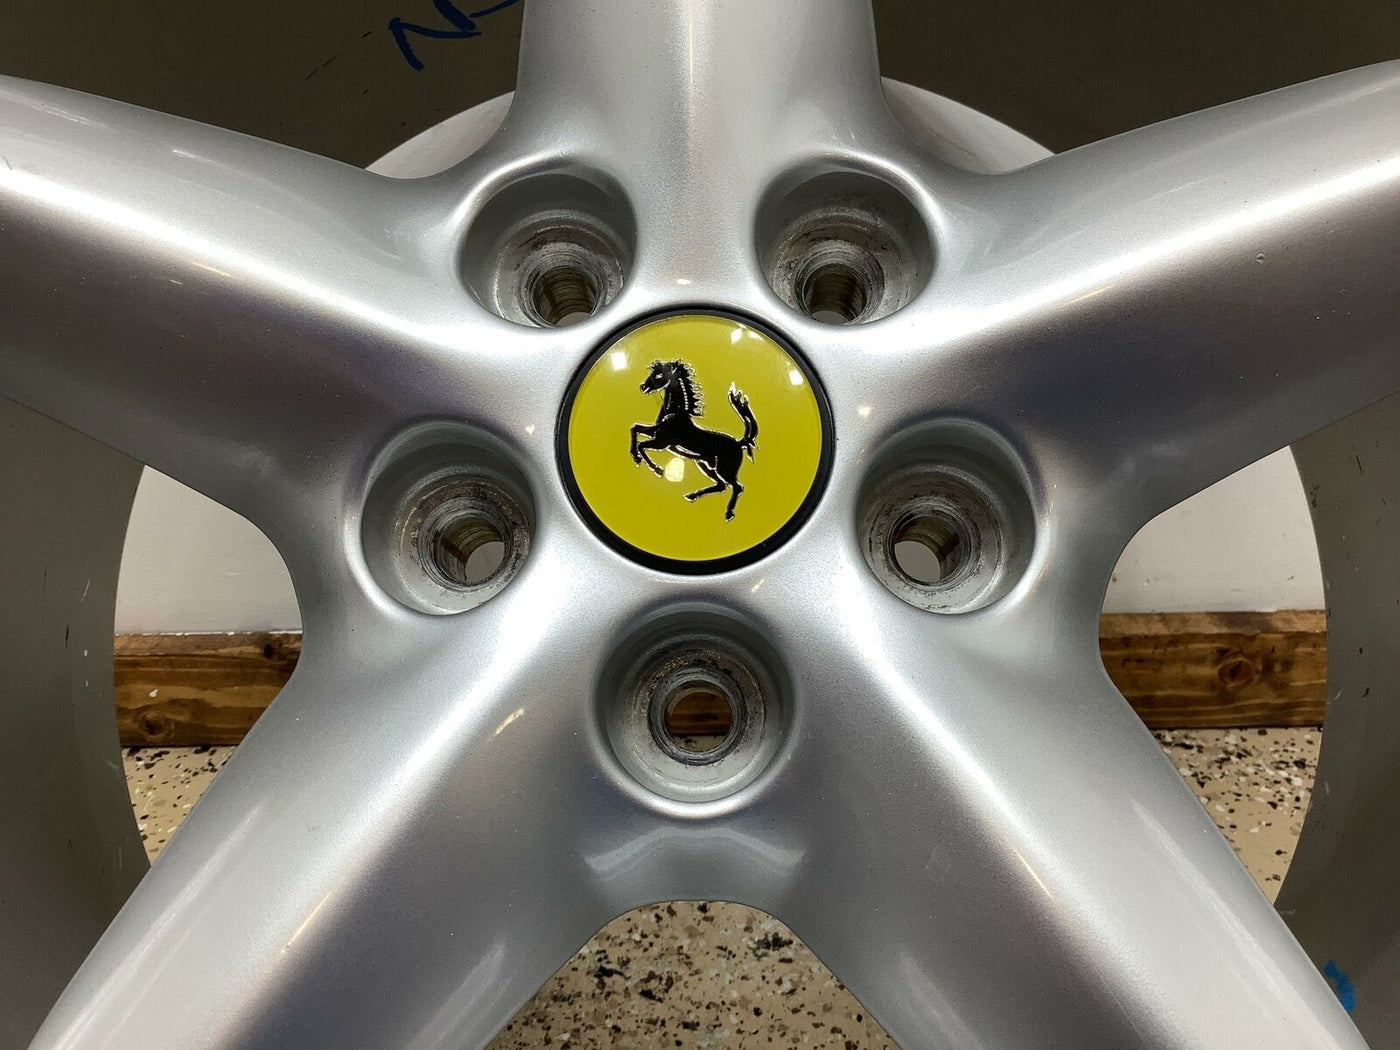 Ferrari 360 Spider 18X10 5 Spoke Wheel W/ Center Cap OEM (164175)Crack/Curb Rash